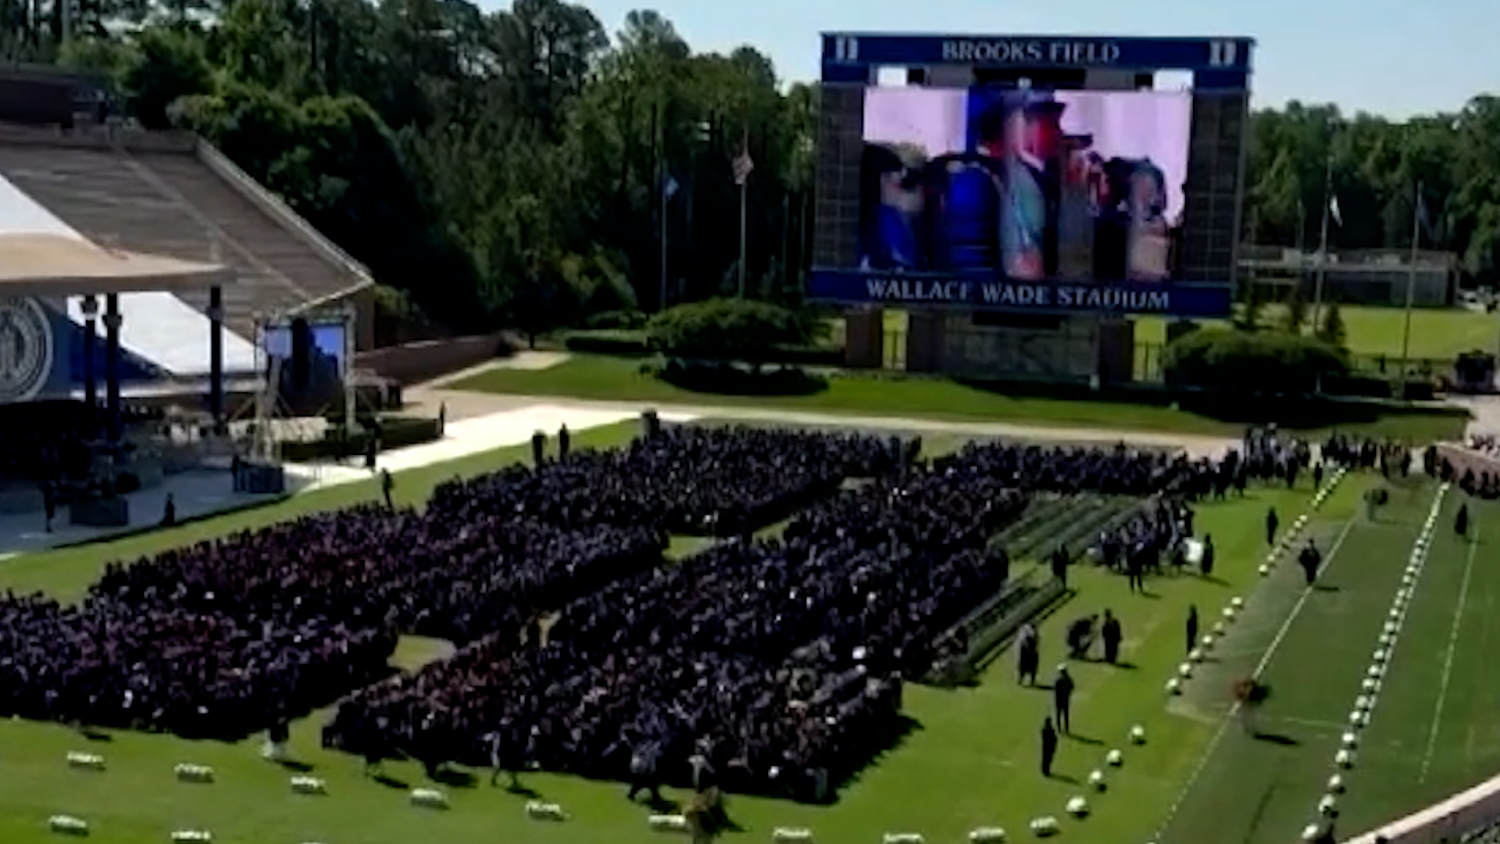 Duke students walk out of Seinfeld commencement speech